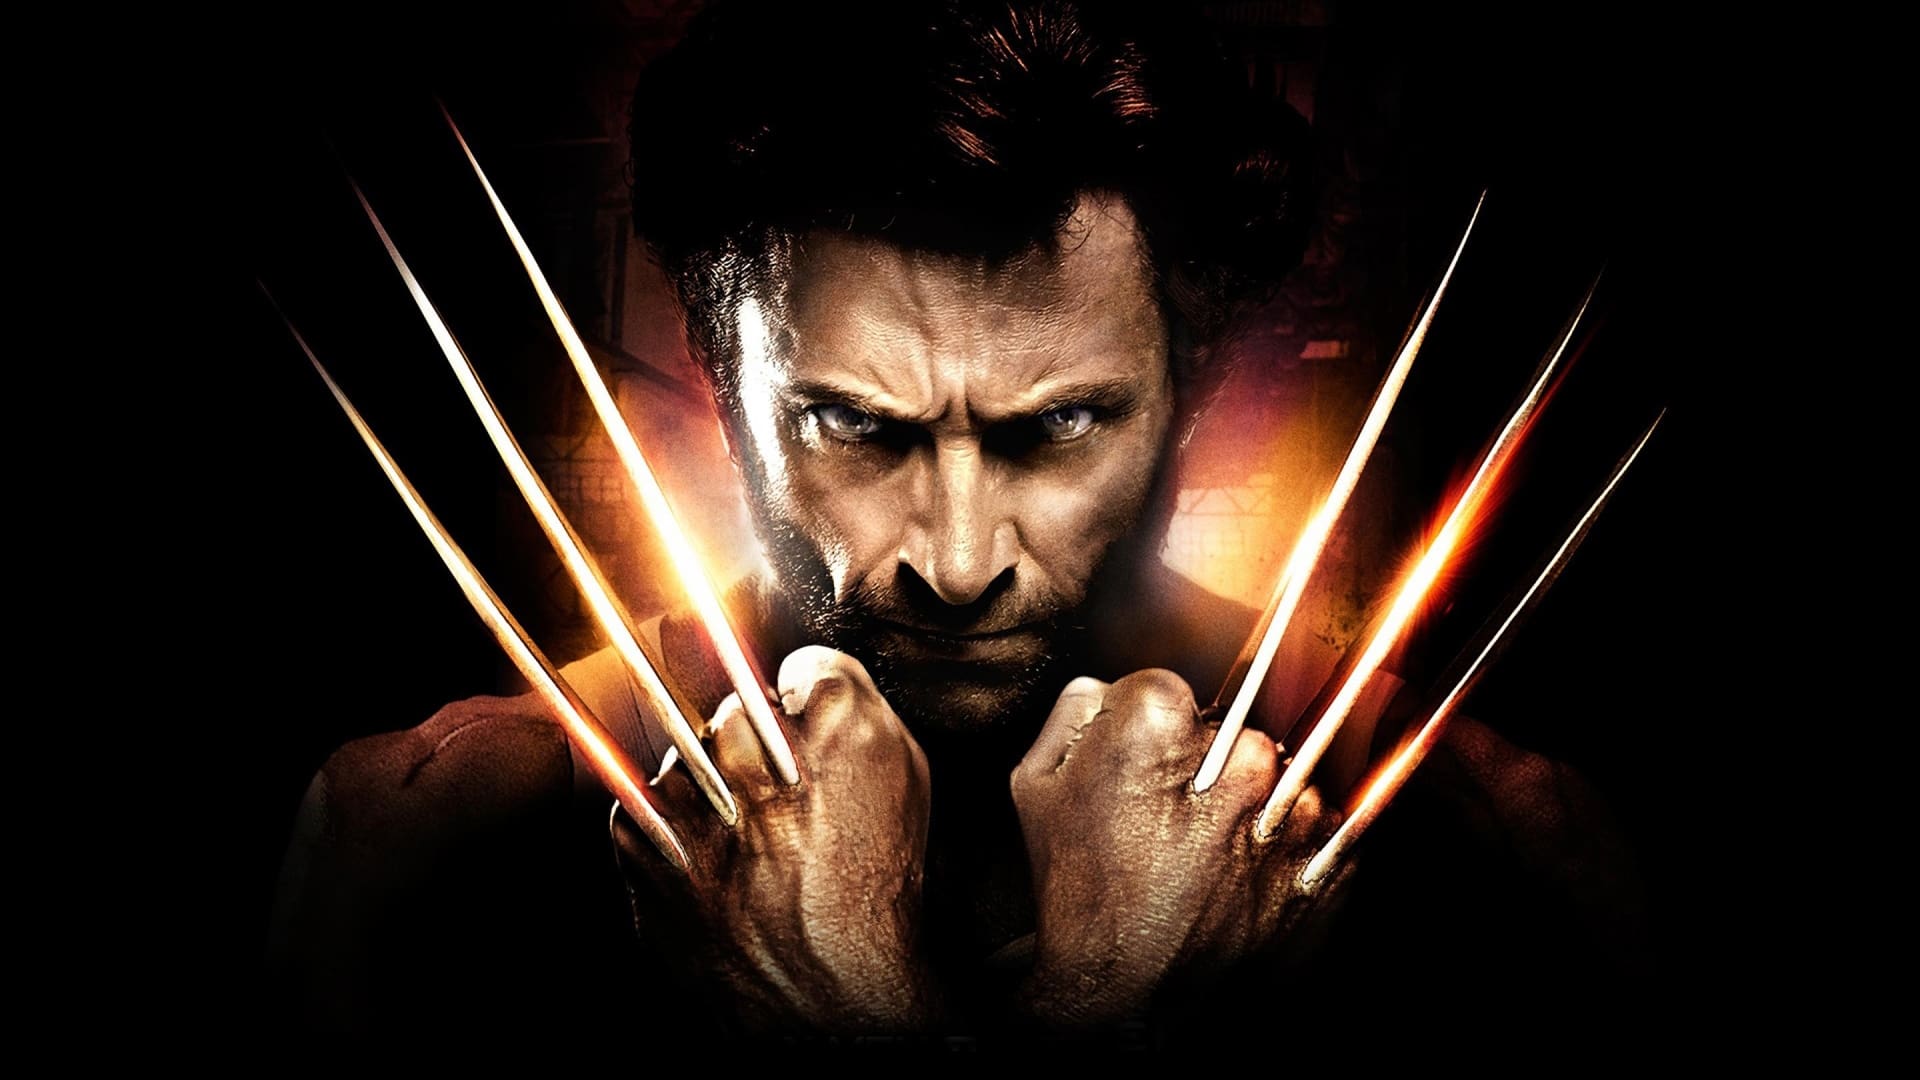 Banner Phim Dị Nhân 4: Nguồn Gốc Người Sói (X-Men Origins: Wolverine)